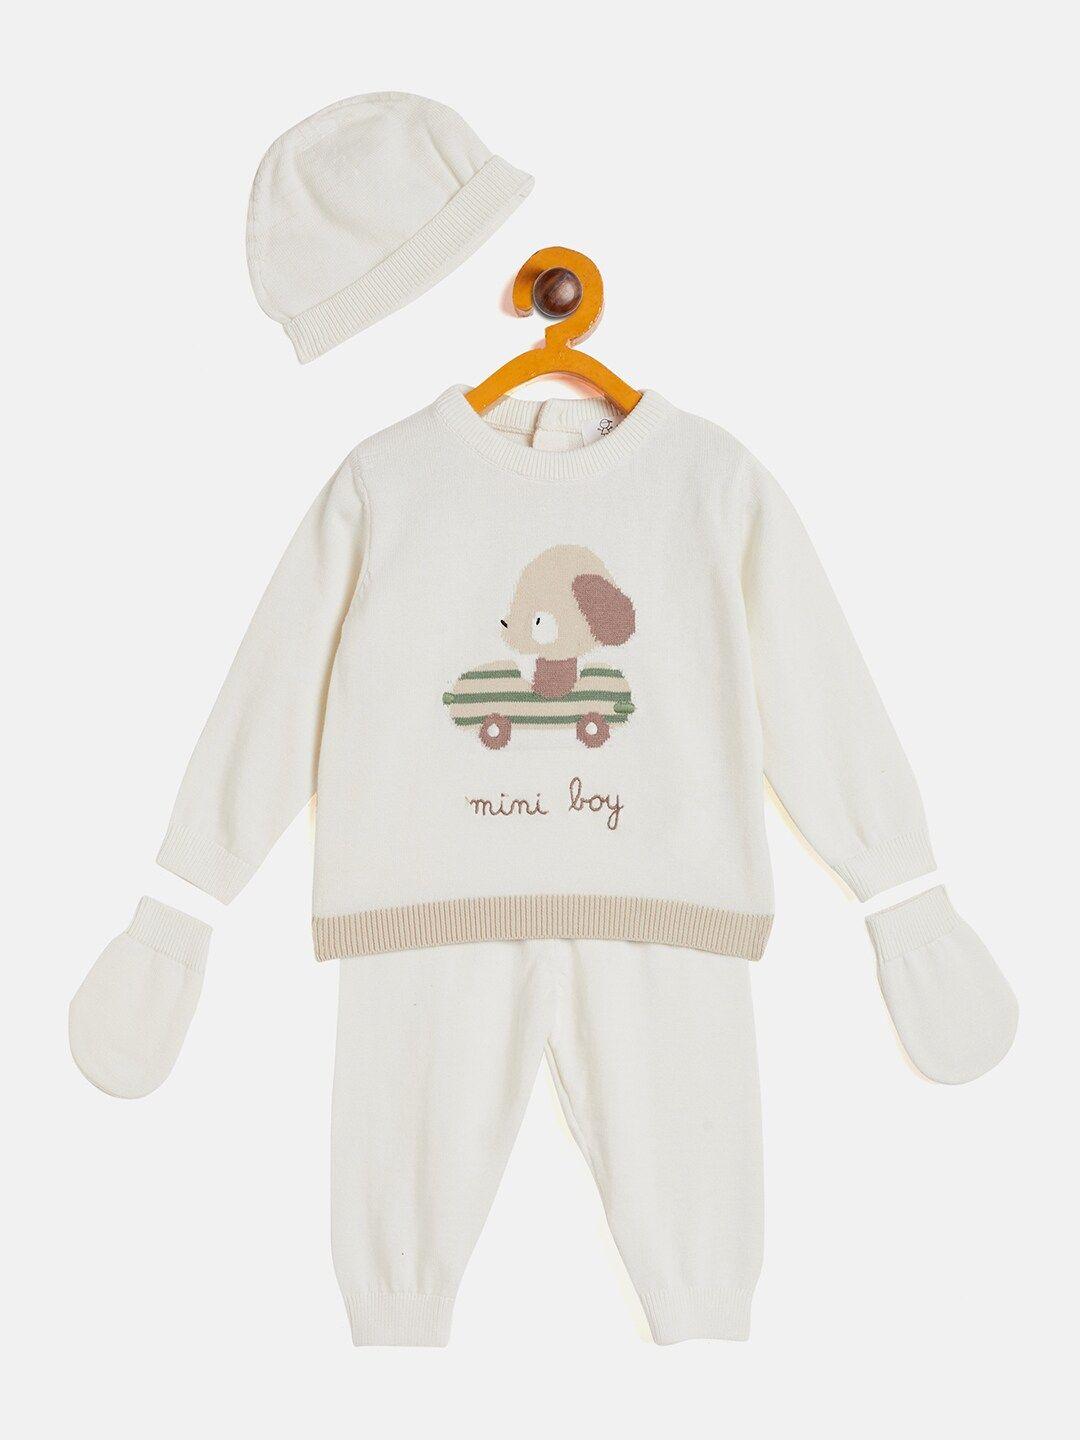 jwaaq infants printed pure cotton sweatshirt & pyjamas with cap & mittens